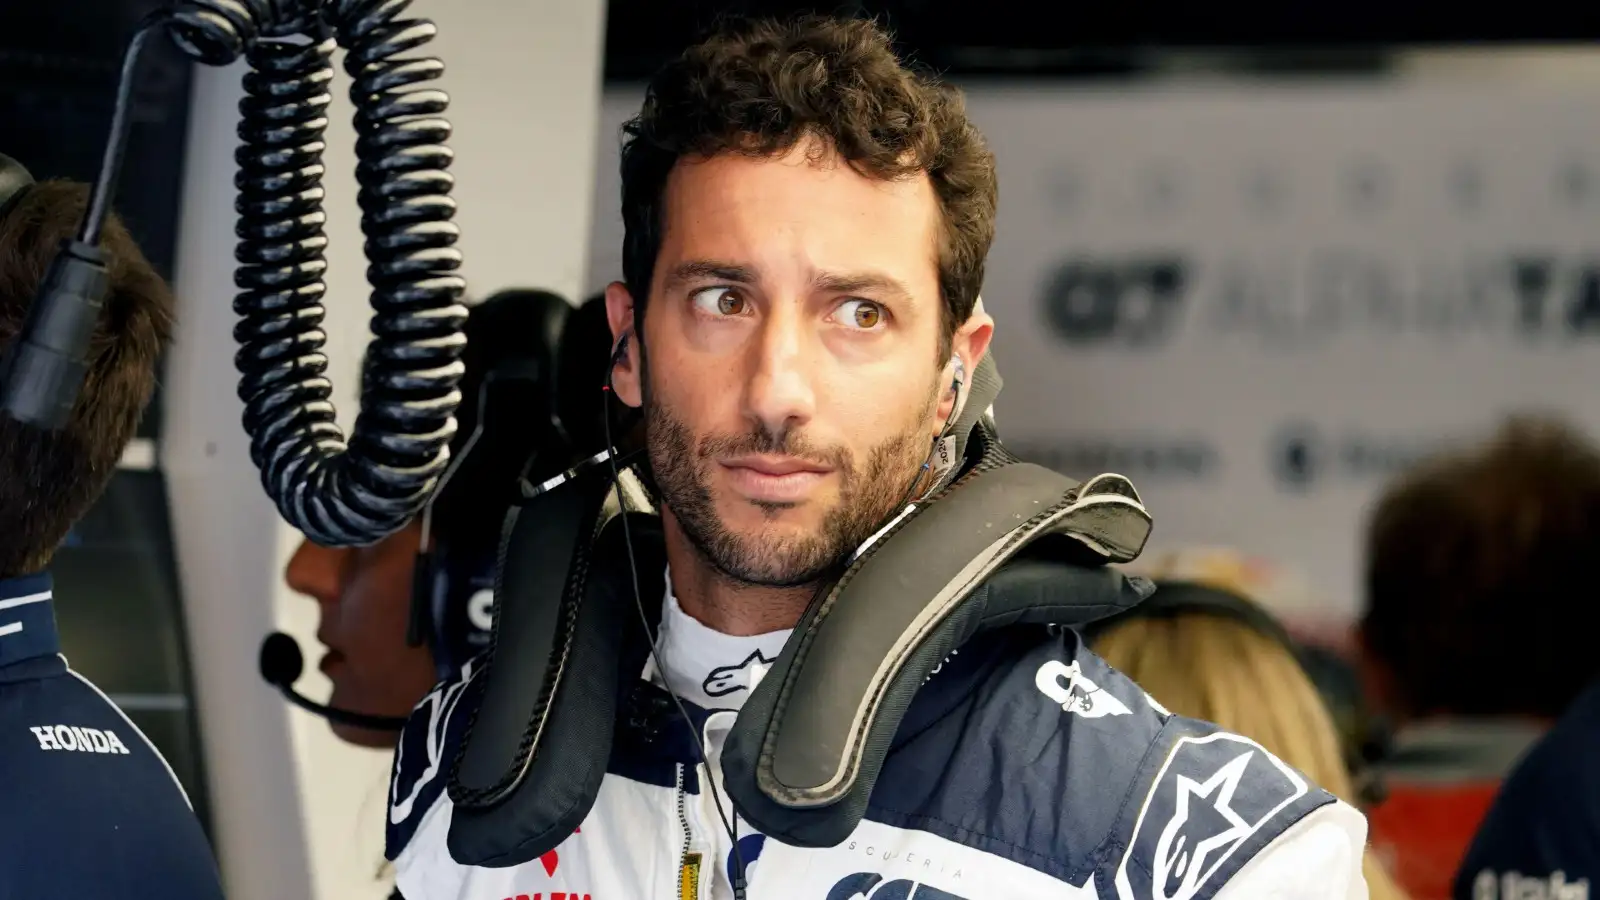 Daniel Ricciardo pictured in his AlphaTauri garage at the Dutch Grand Prix in Zandvoort.